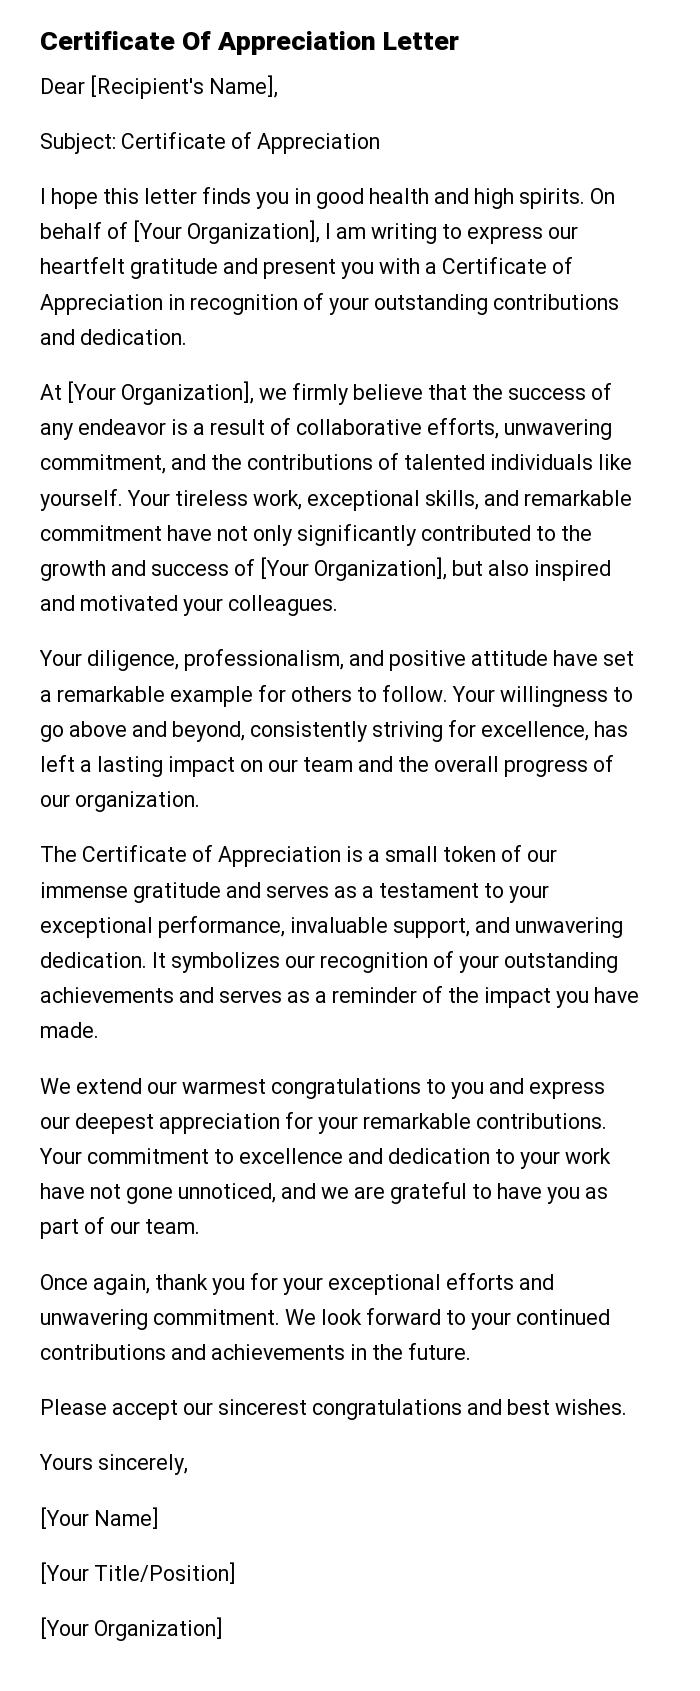 Certificate Of Appreciation Letter